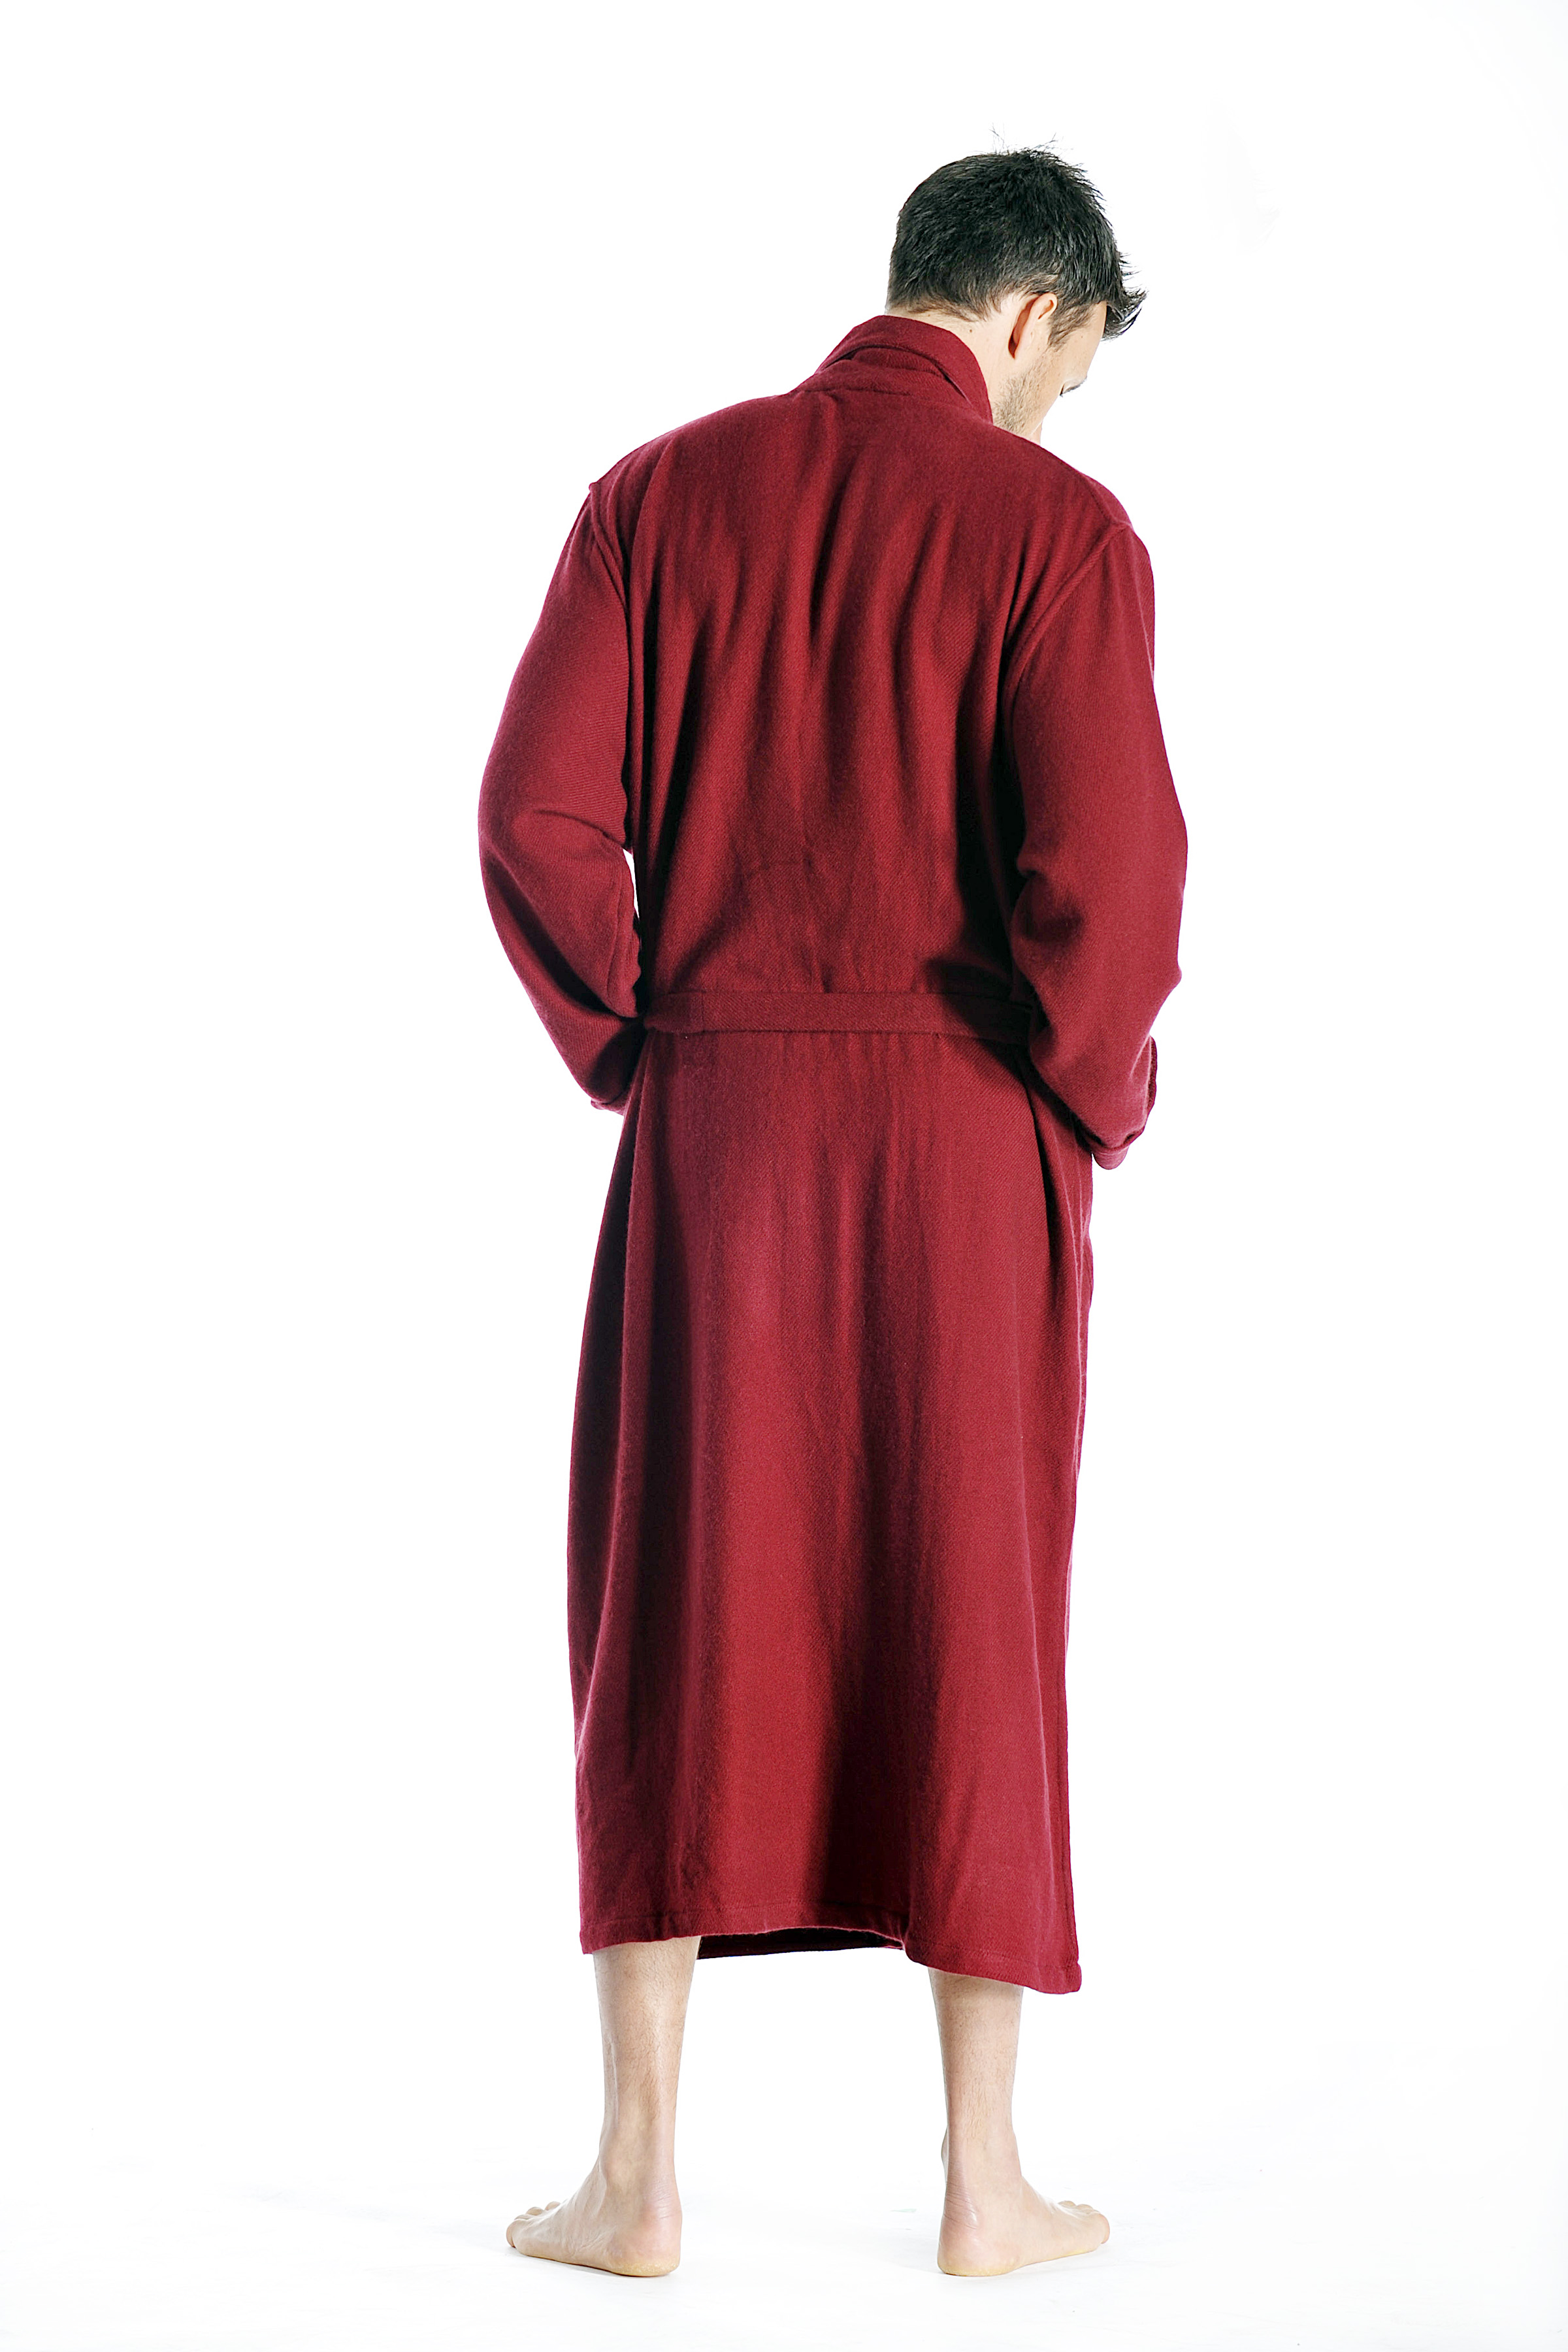 Pure Cashmere Full Length Robe for Men (Camel, Small/Medium)